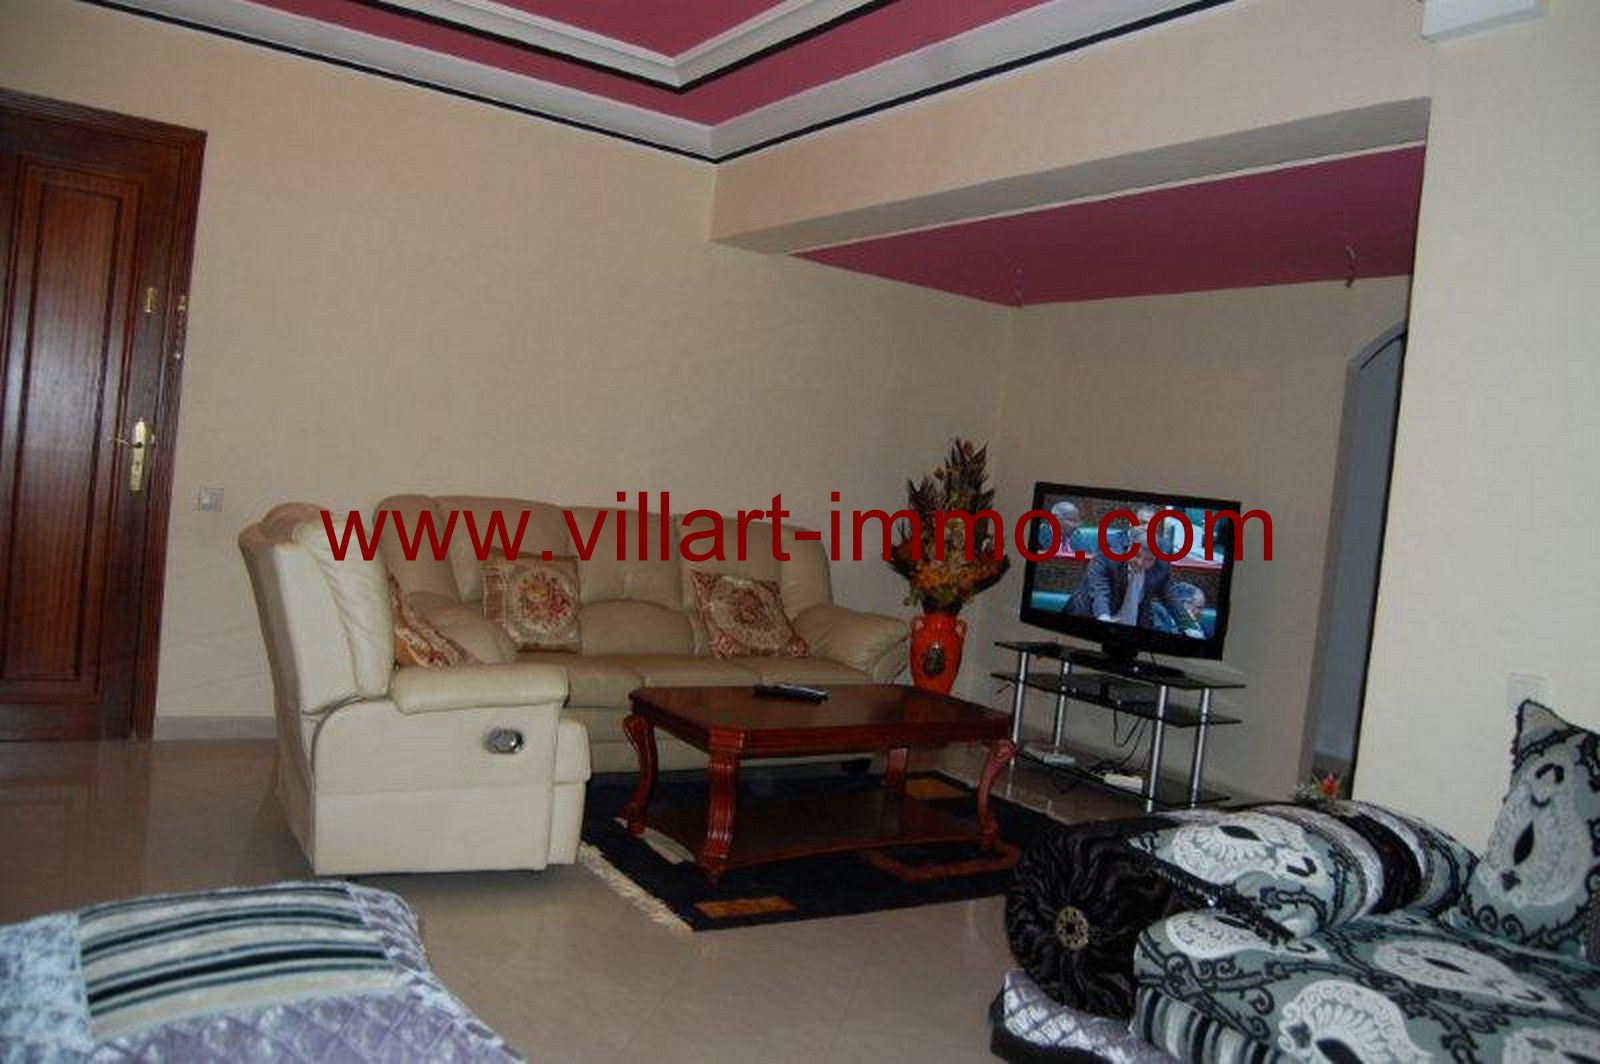 2- Vente -appartement-Tanger-Maroc–Centre-De-Ville-Salon 2-VA145-Villartimmo